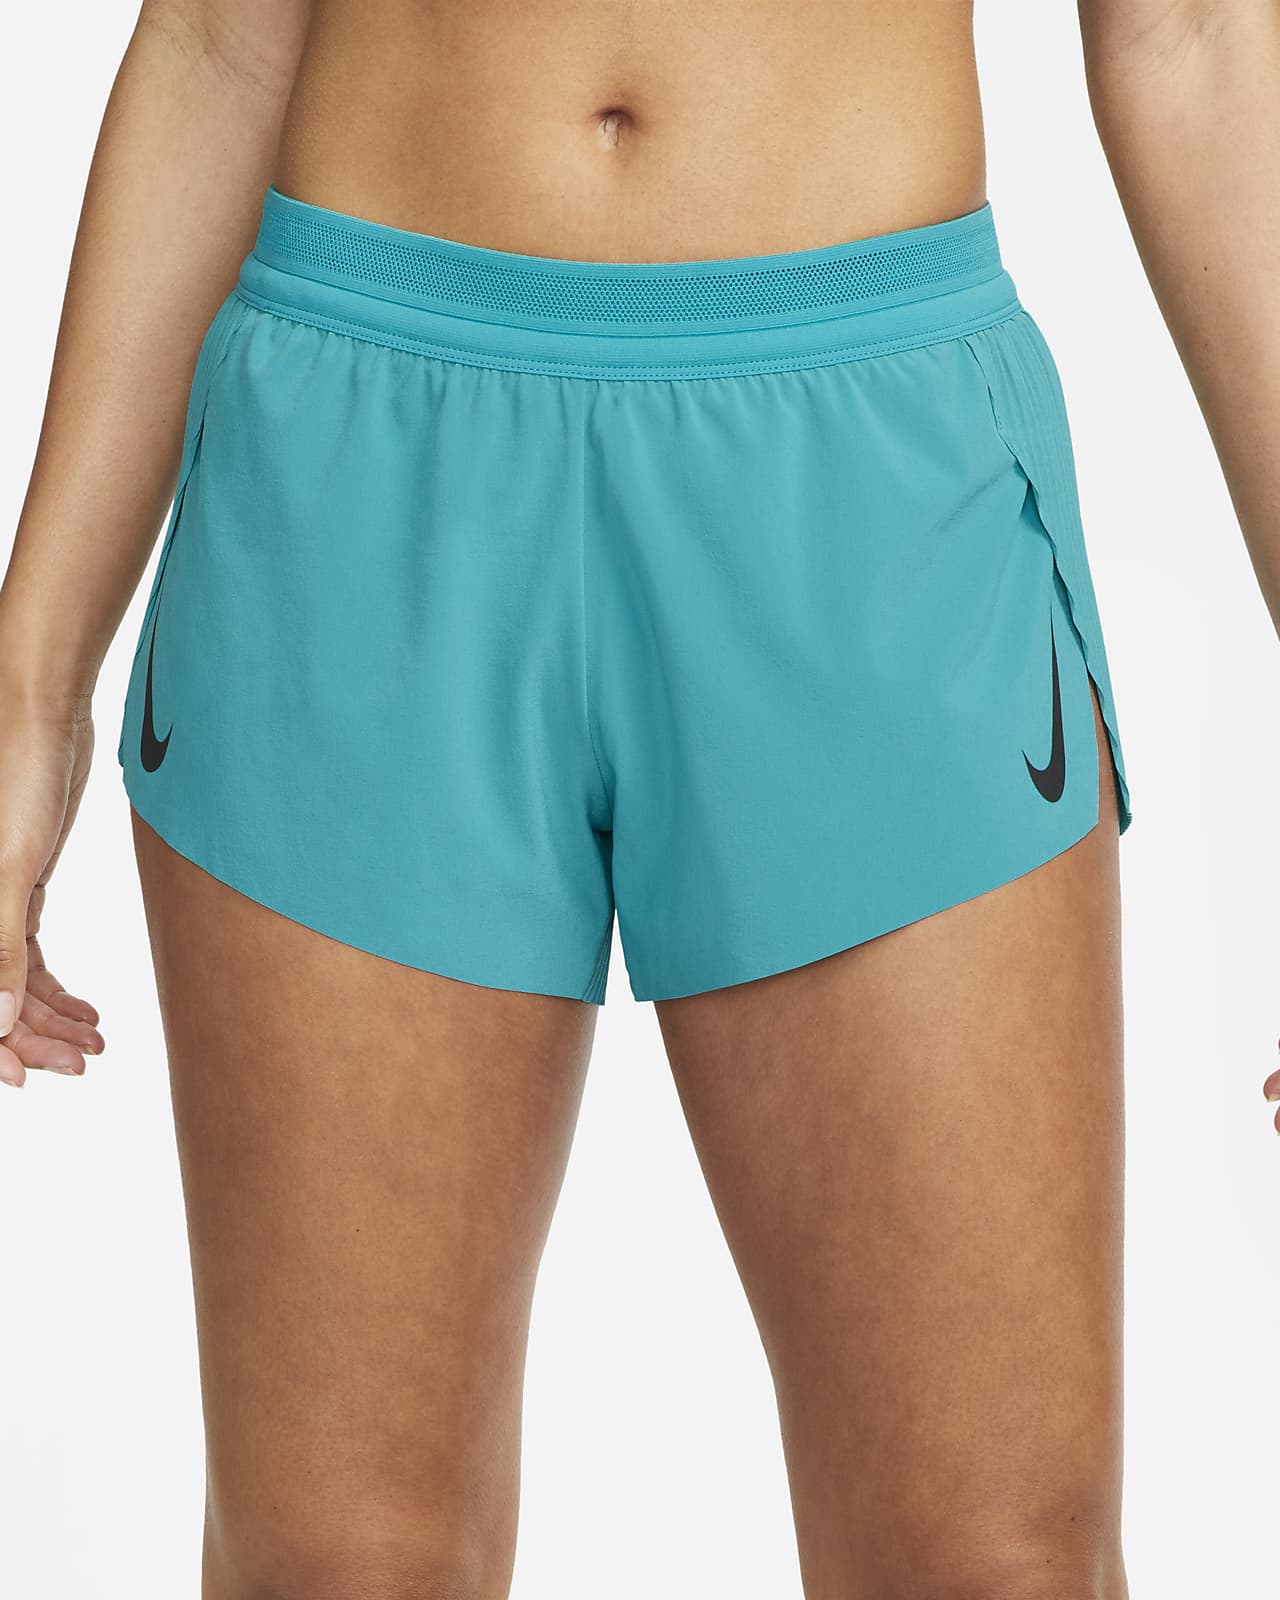 Women's Gym Shorts. Training & Workout Shorts. Nike CA